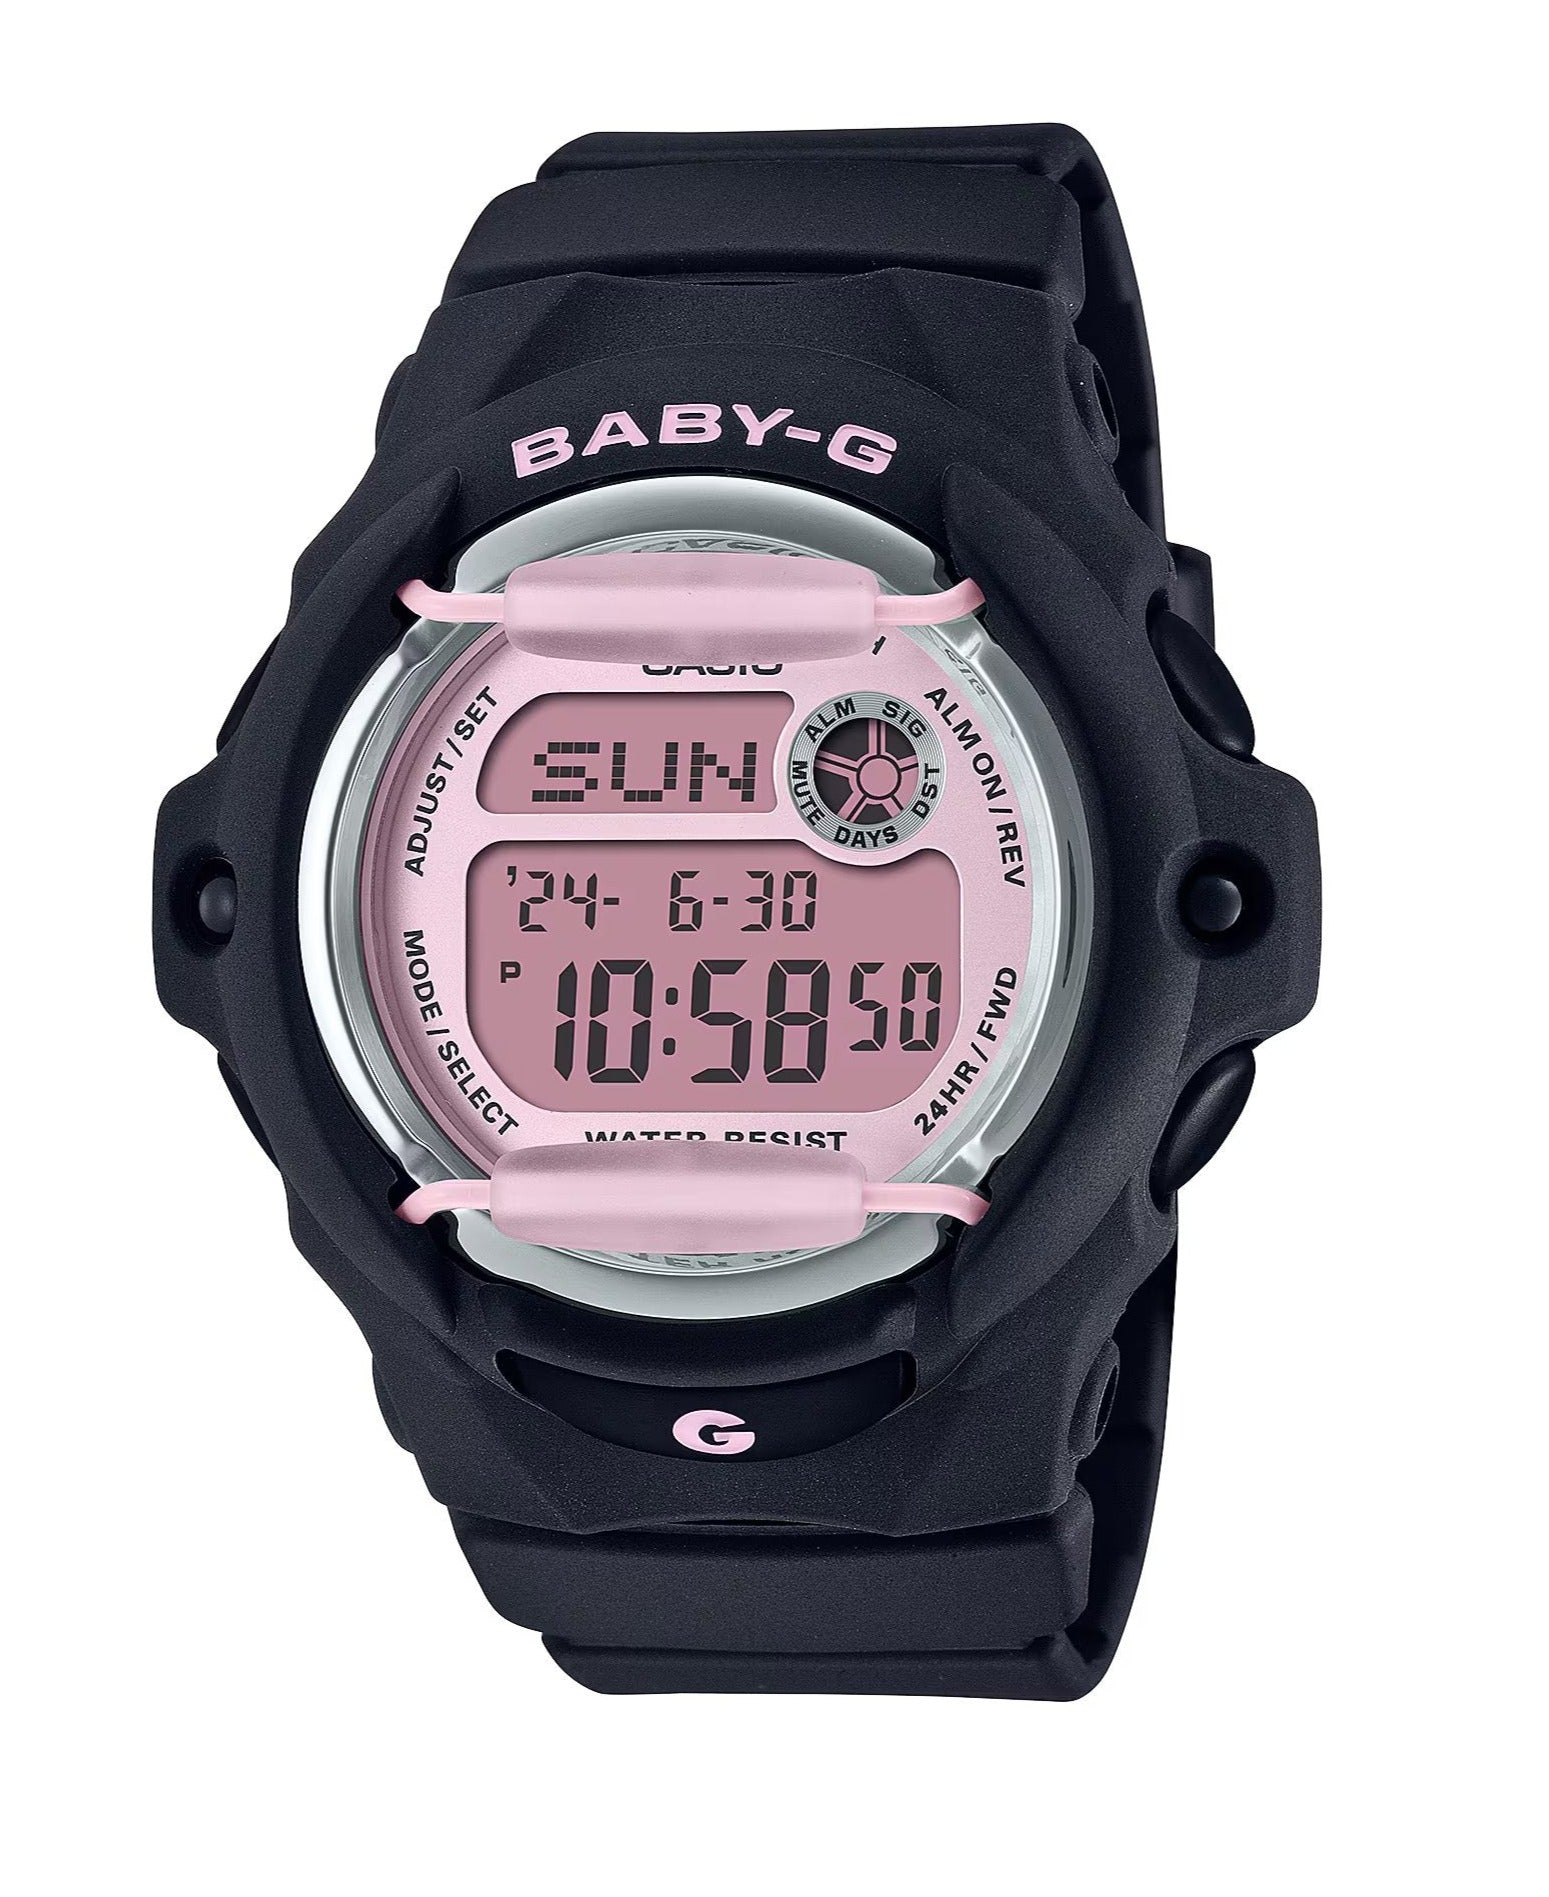 Baby G Digital Watch Black ad Pink BG169U-1C / BG-169U-1C (prev. BG169M-1D)